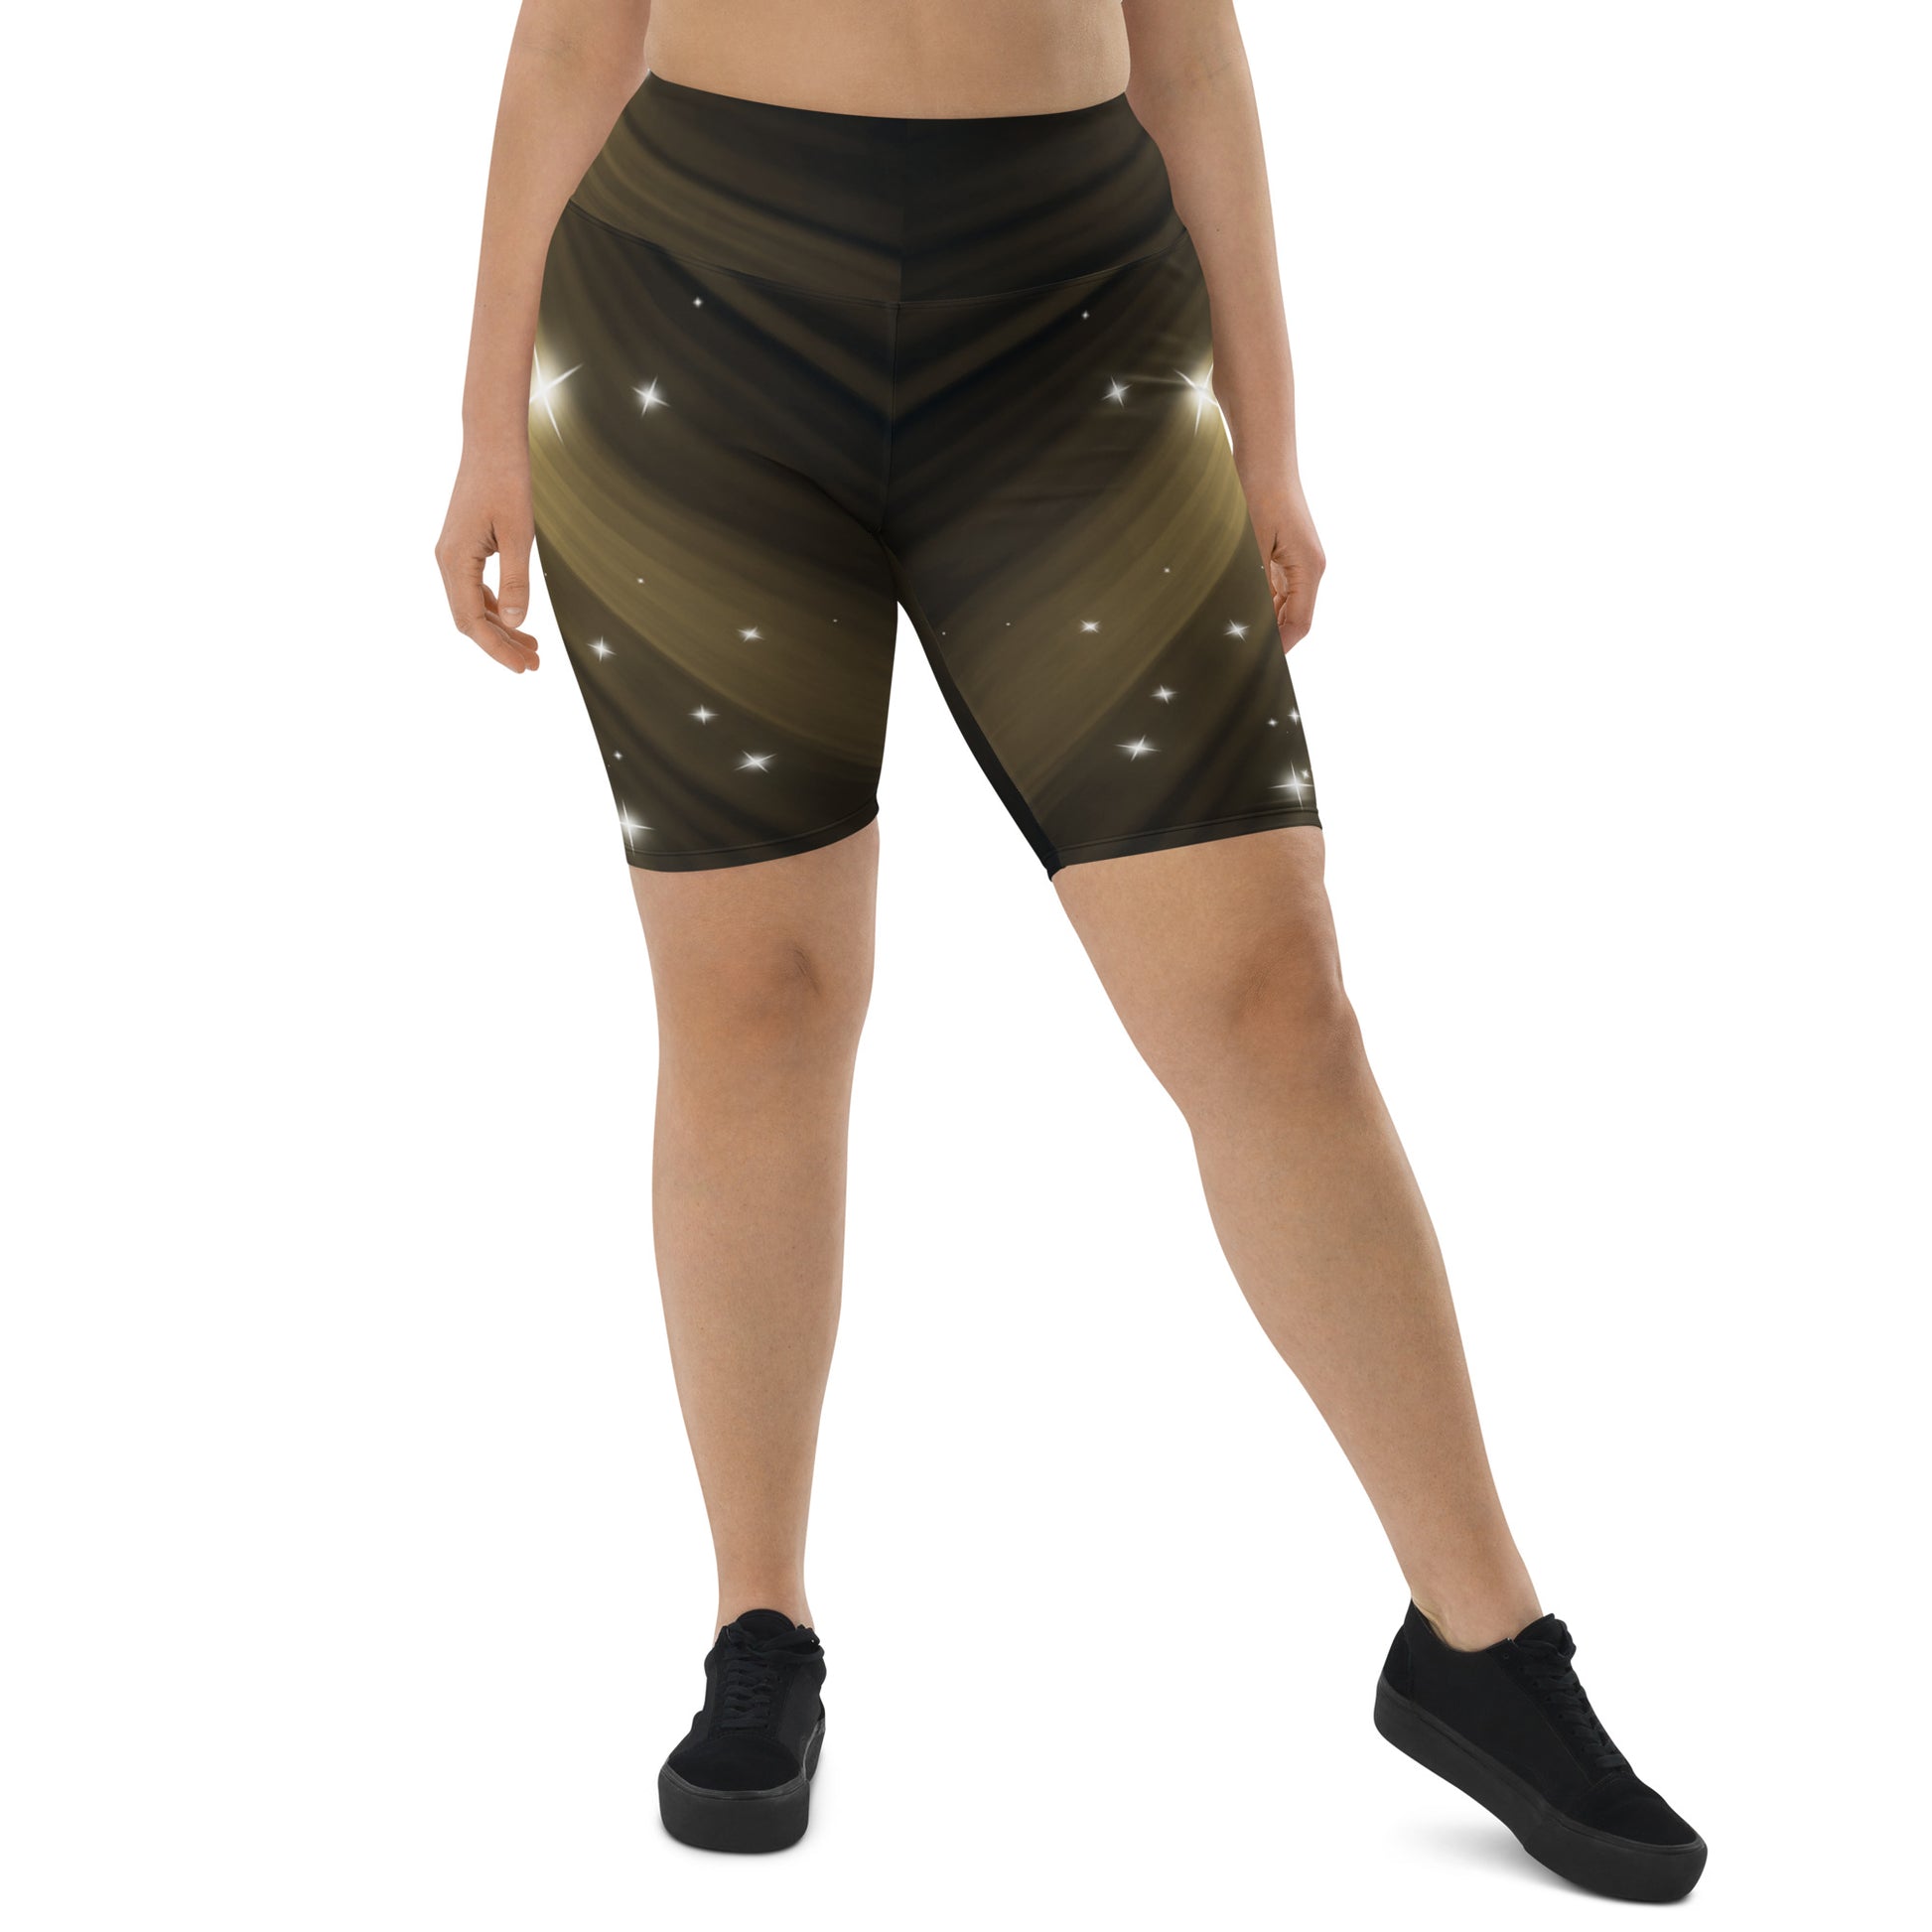 Plus Size Female artist shine bright rocking your Gold Spotlyght Biker Shorts